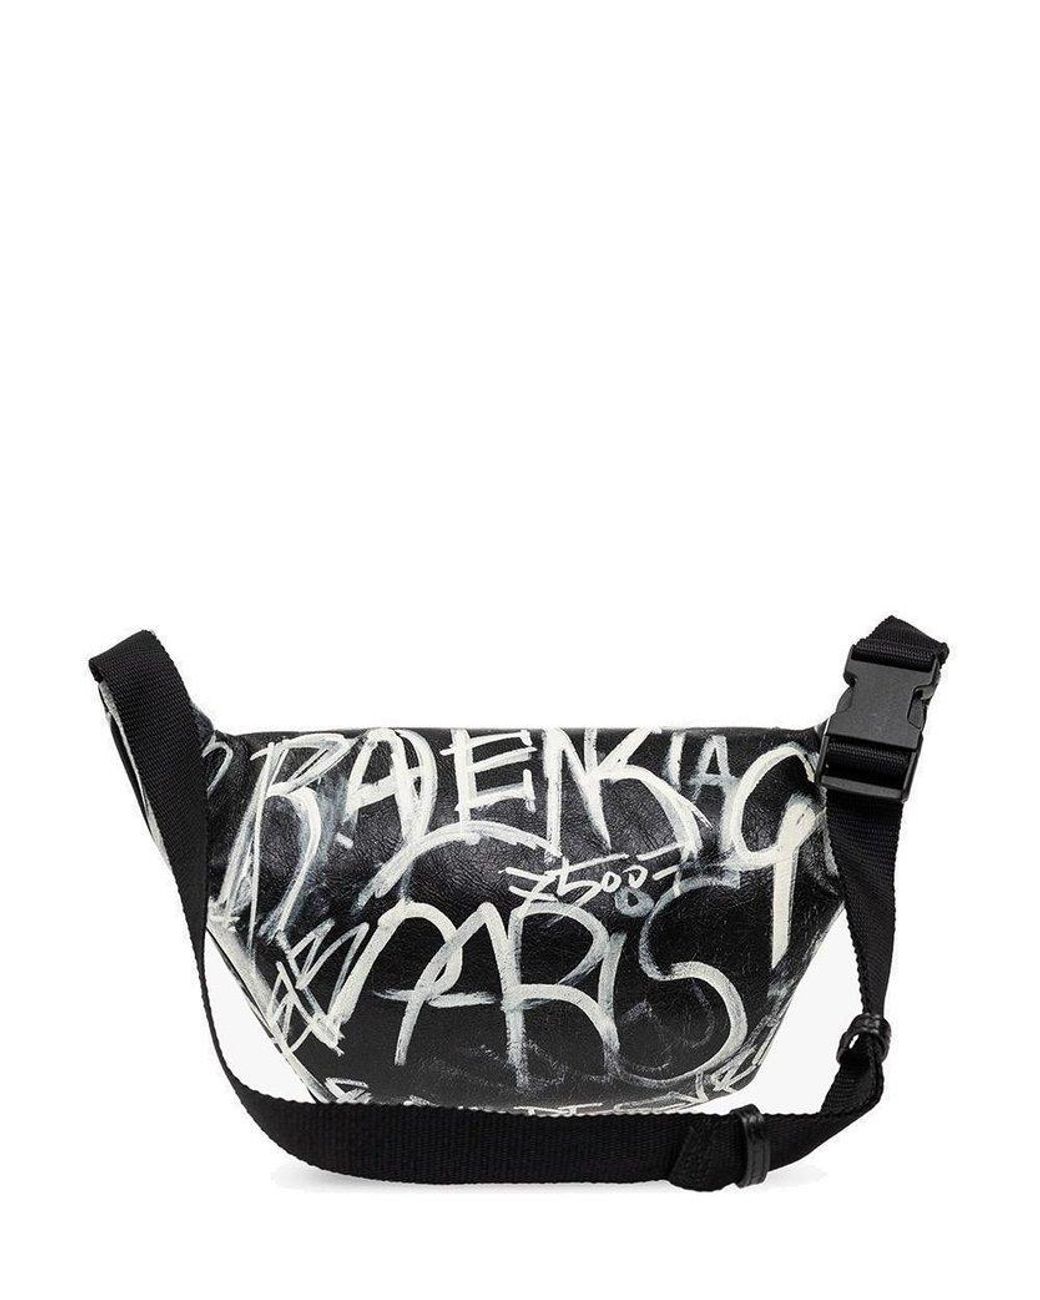 Balenciaga Graffiti Explorer Belt Bag Leather White, Print